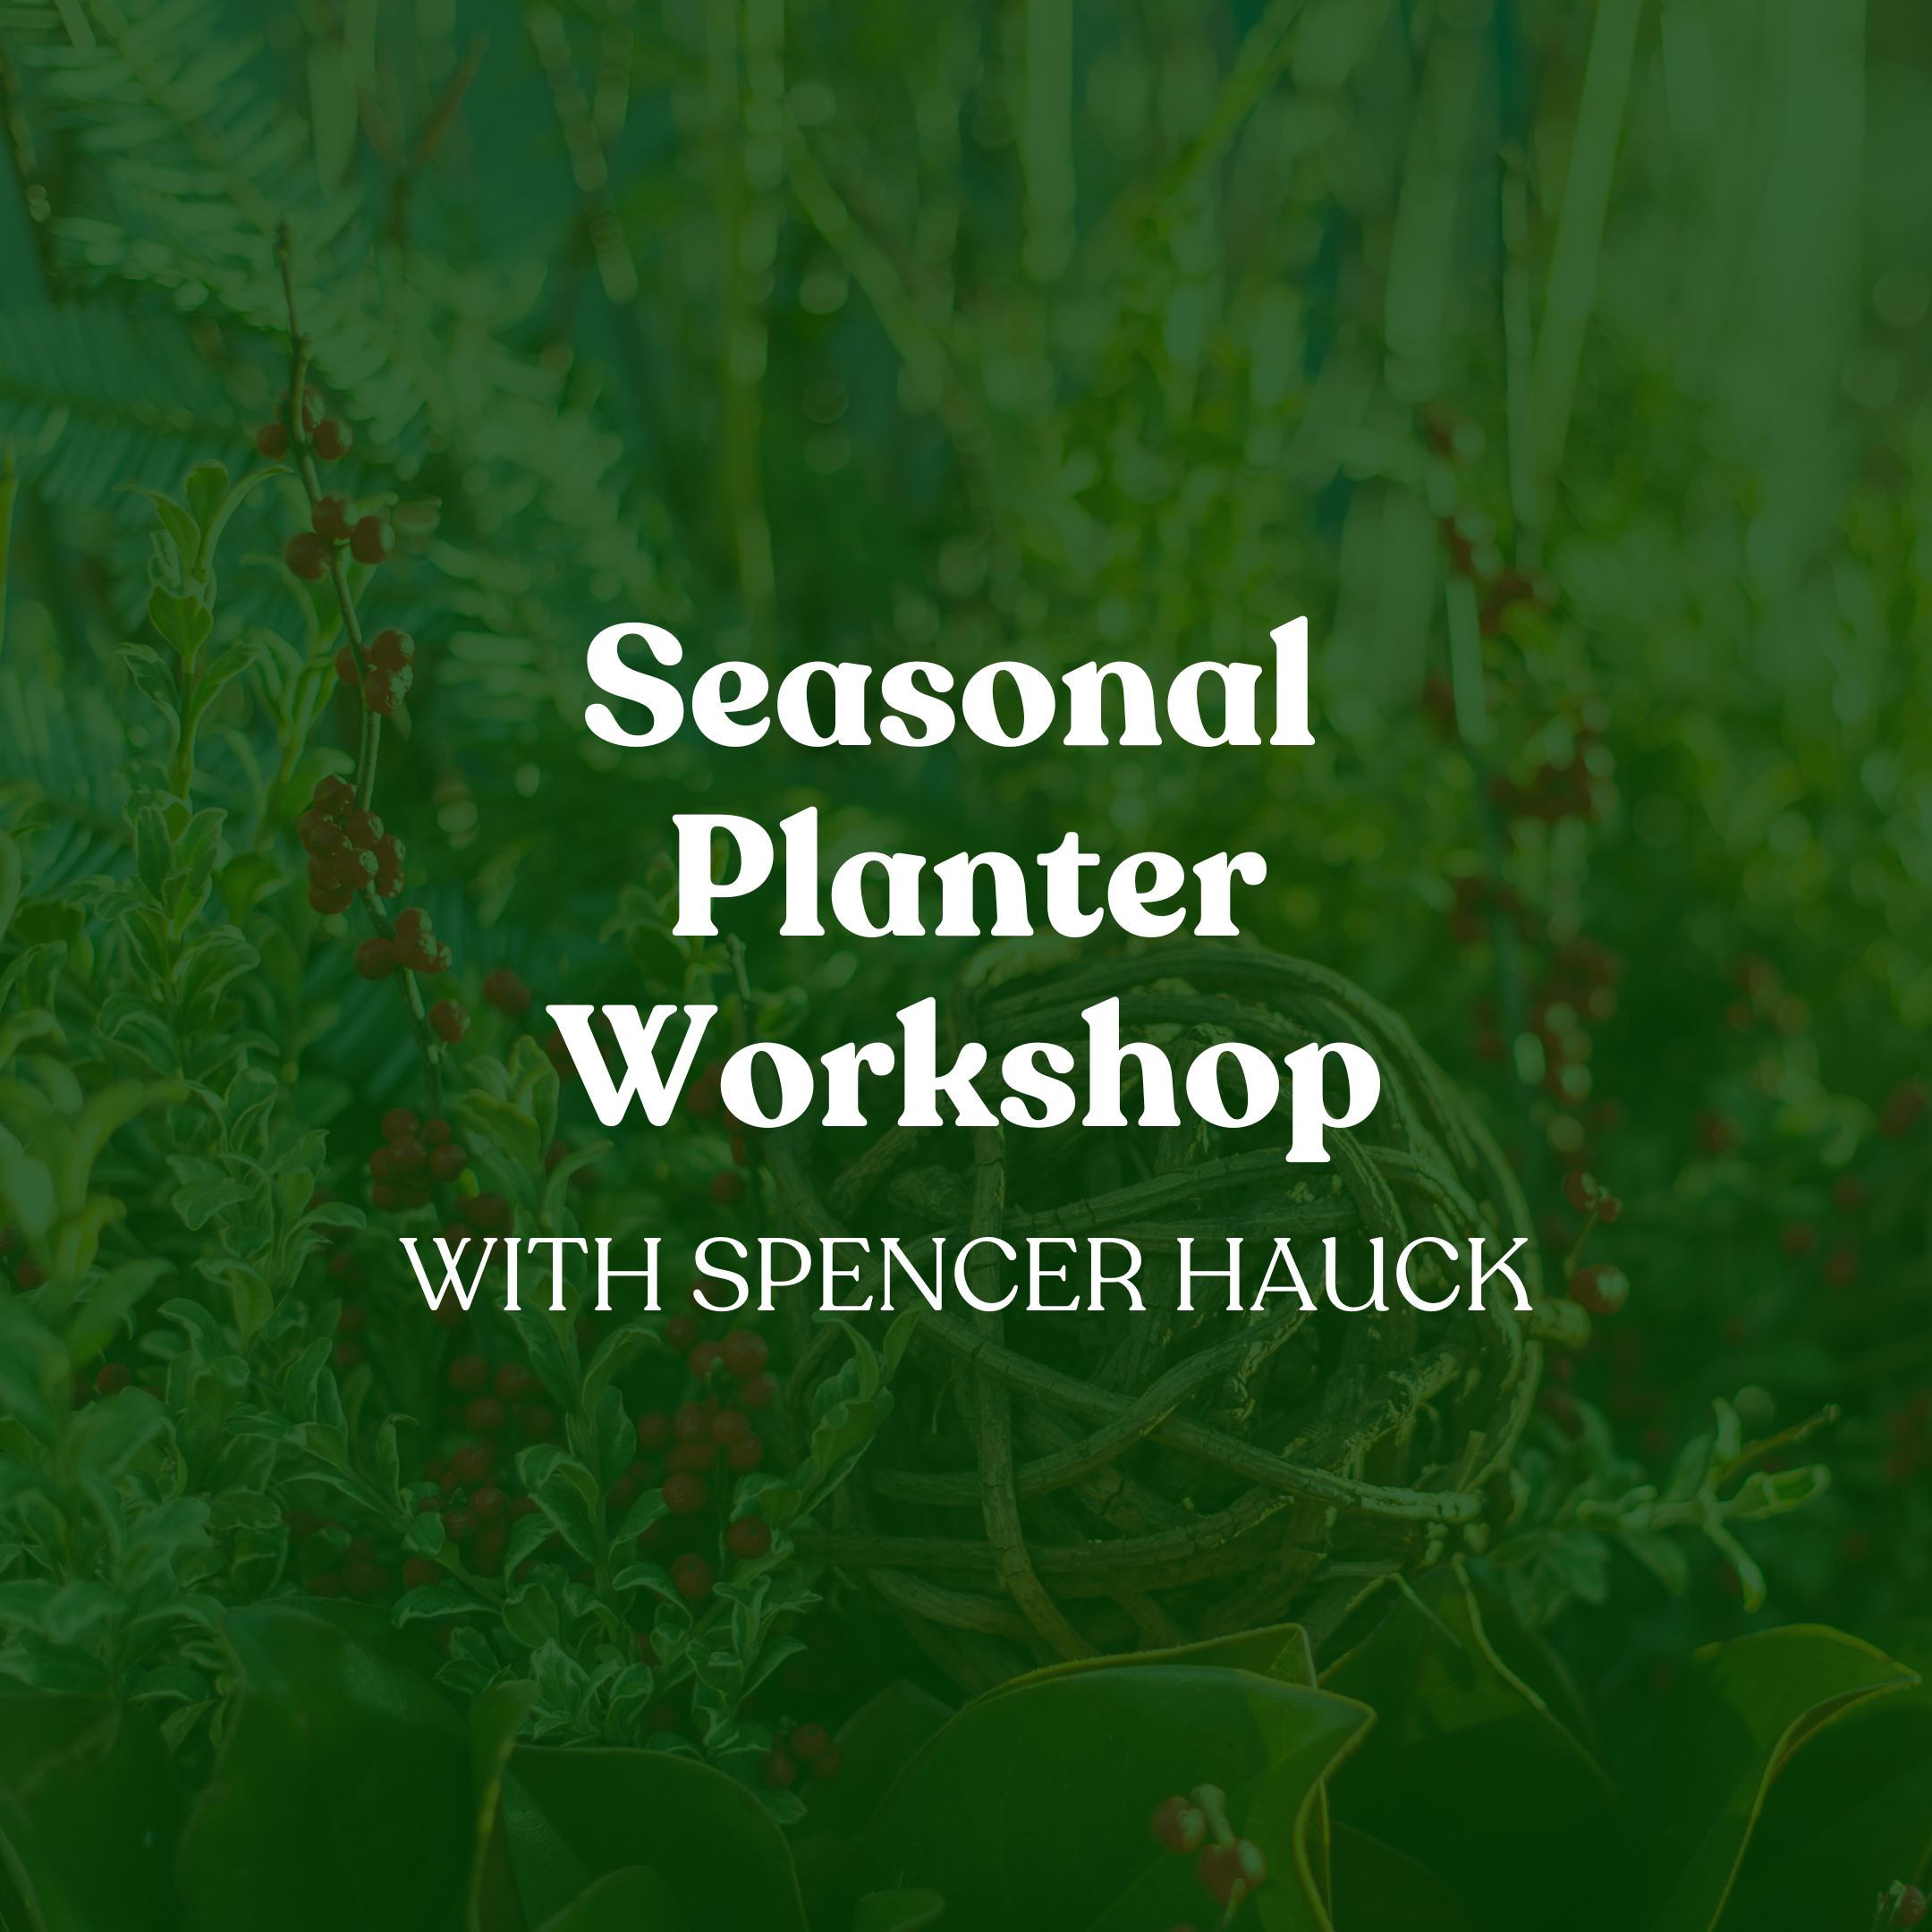 Seasonal Planter Workshop with Spencer Hauck in Kitchener, Ontario